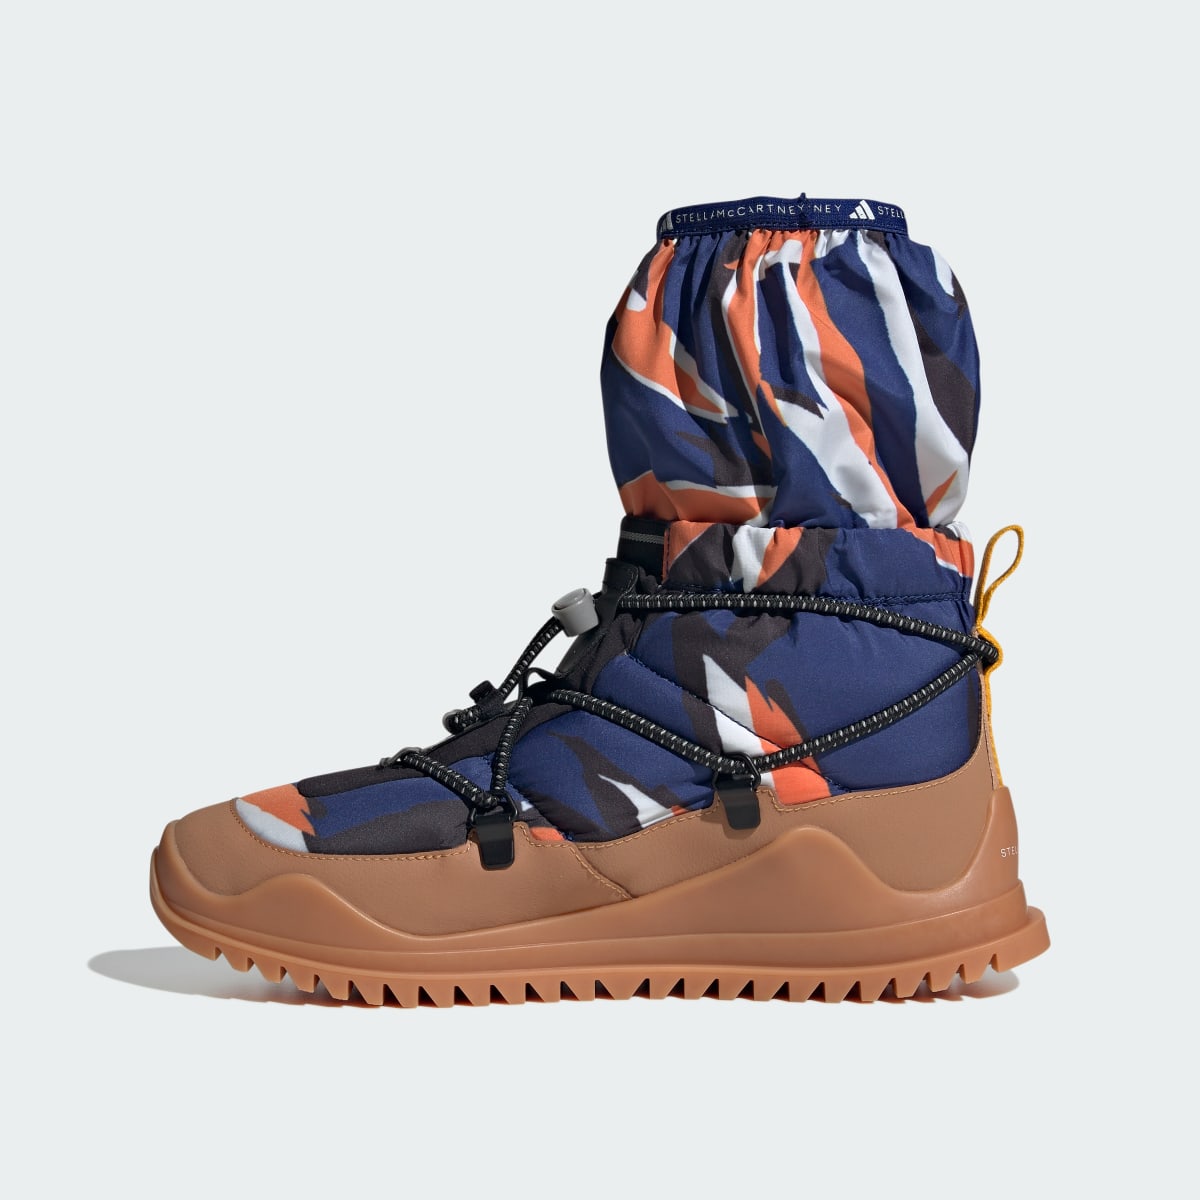 Adidas by Stella McCartney Winter Boots. 7